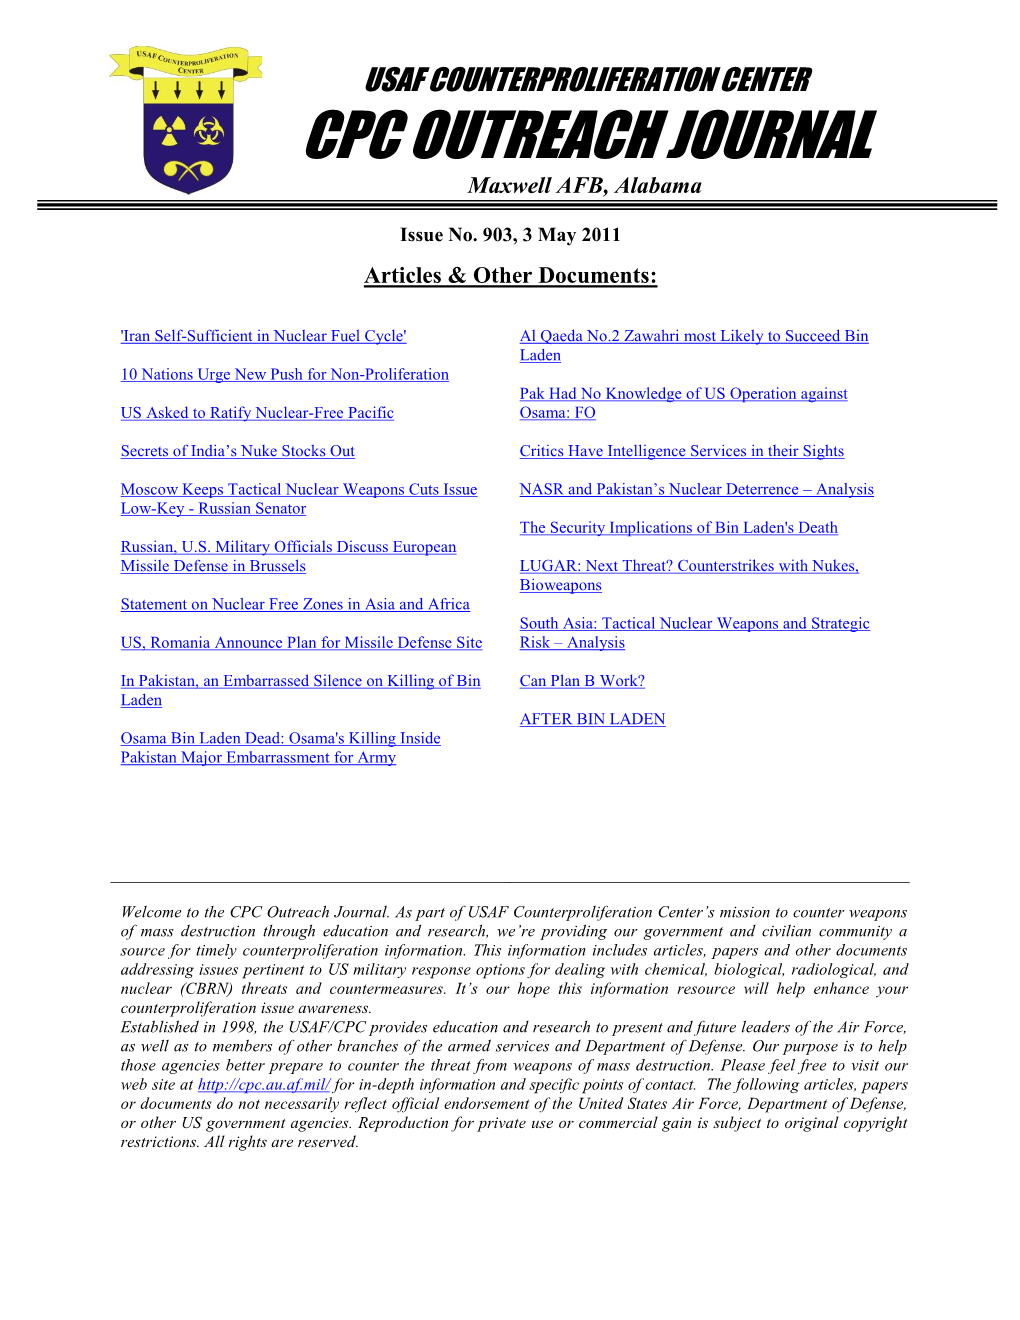 USAF Counteproliferation Center CPC Outreach Journal #903